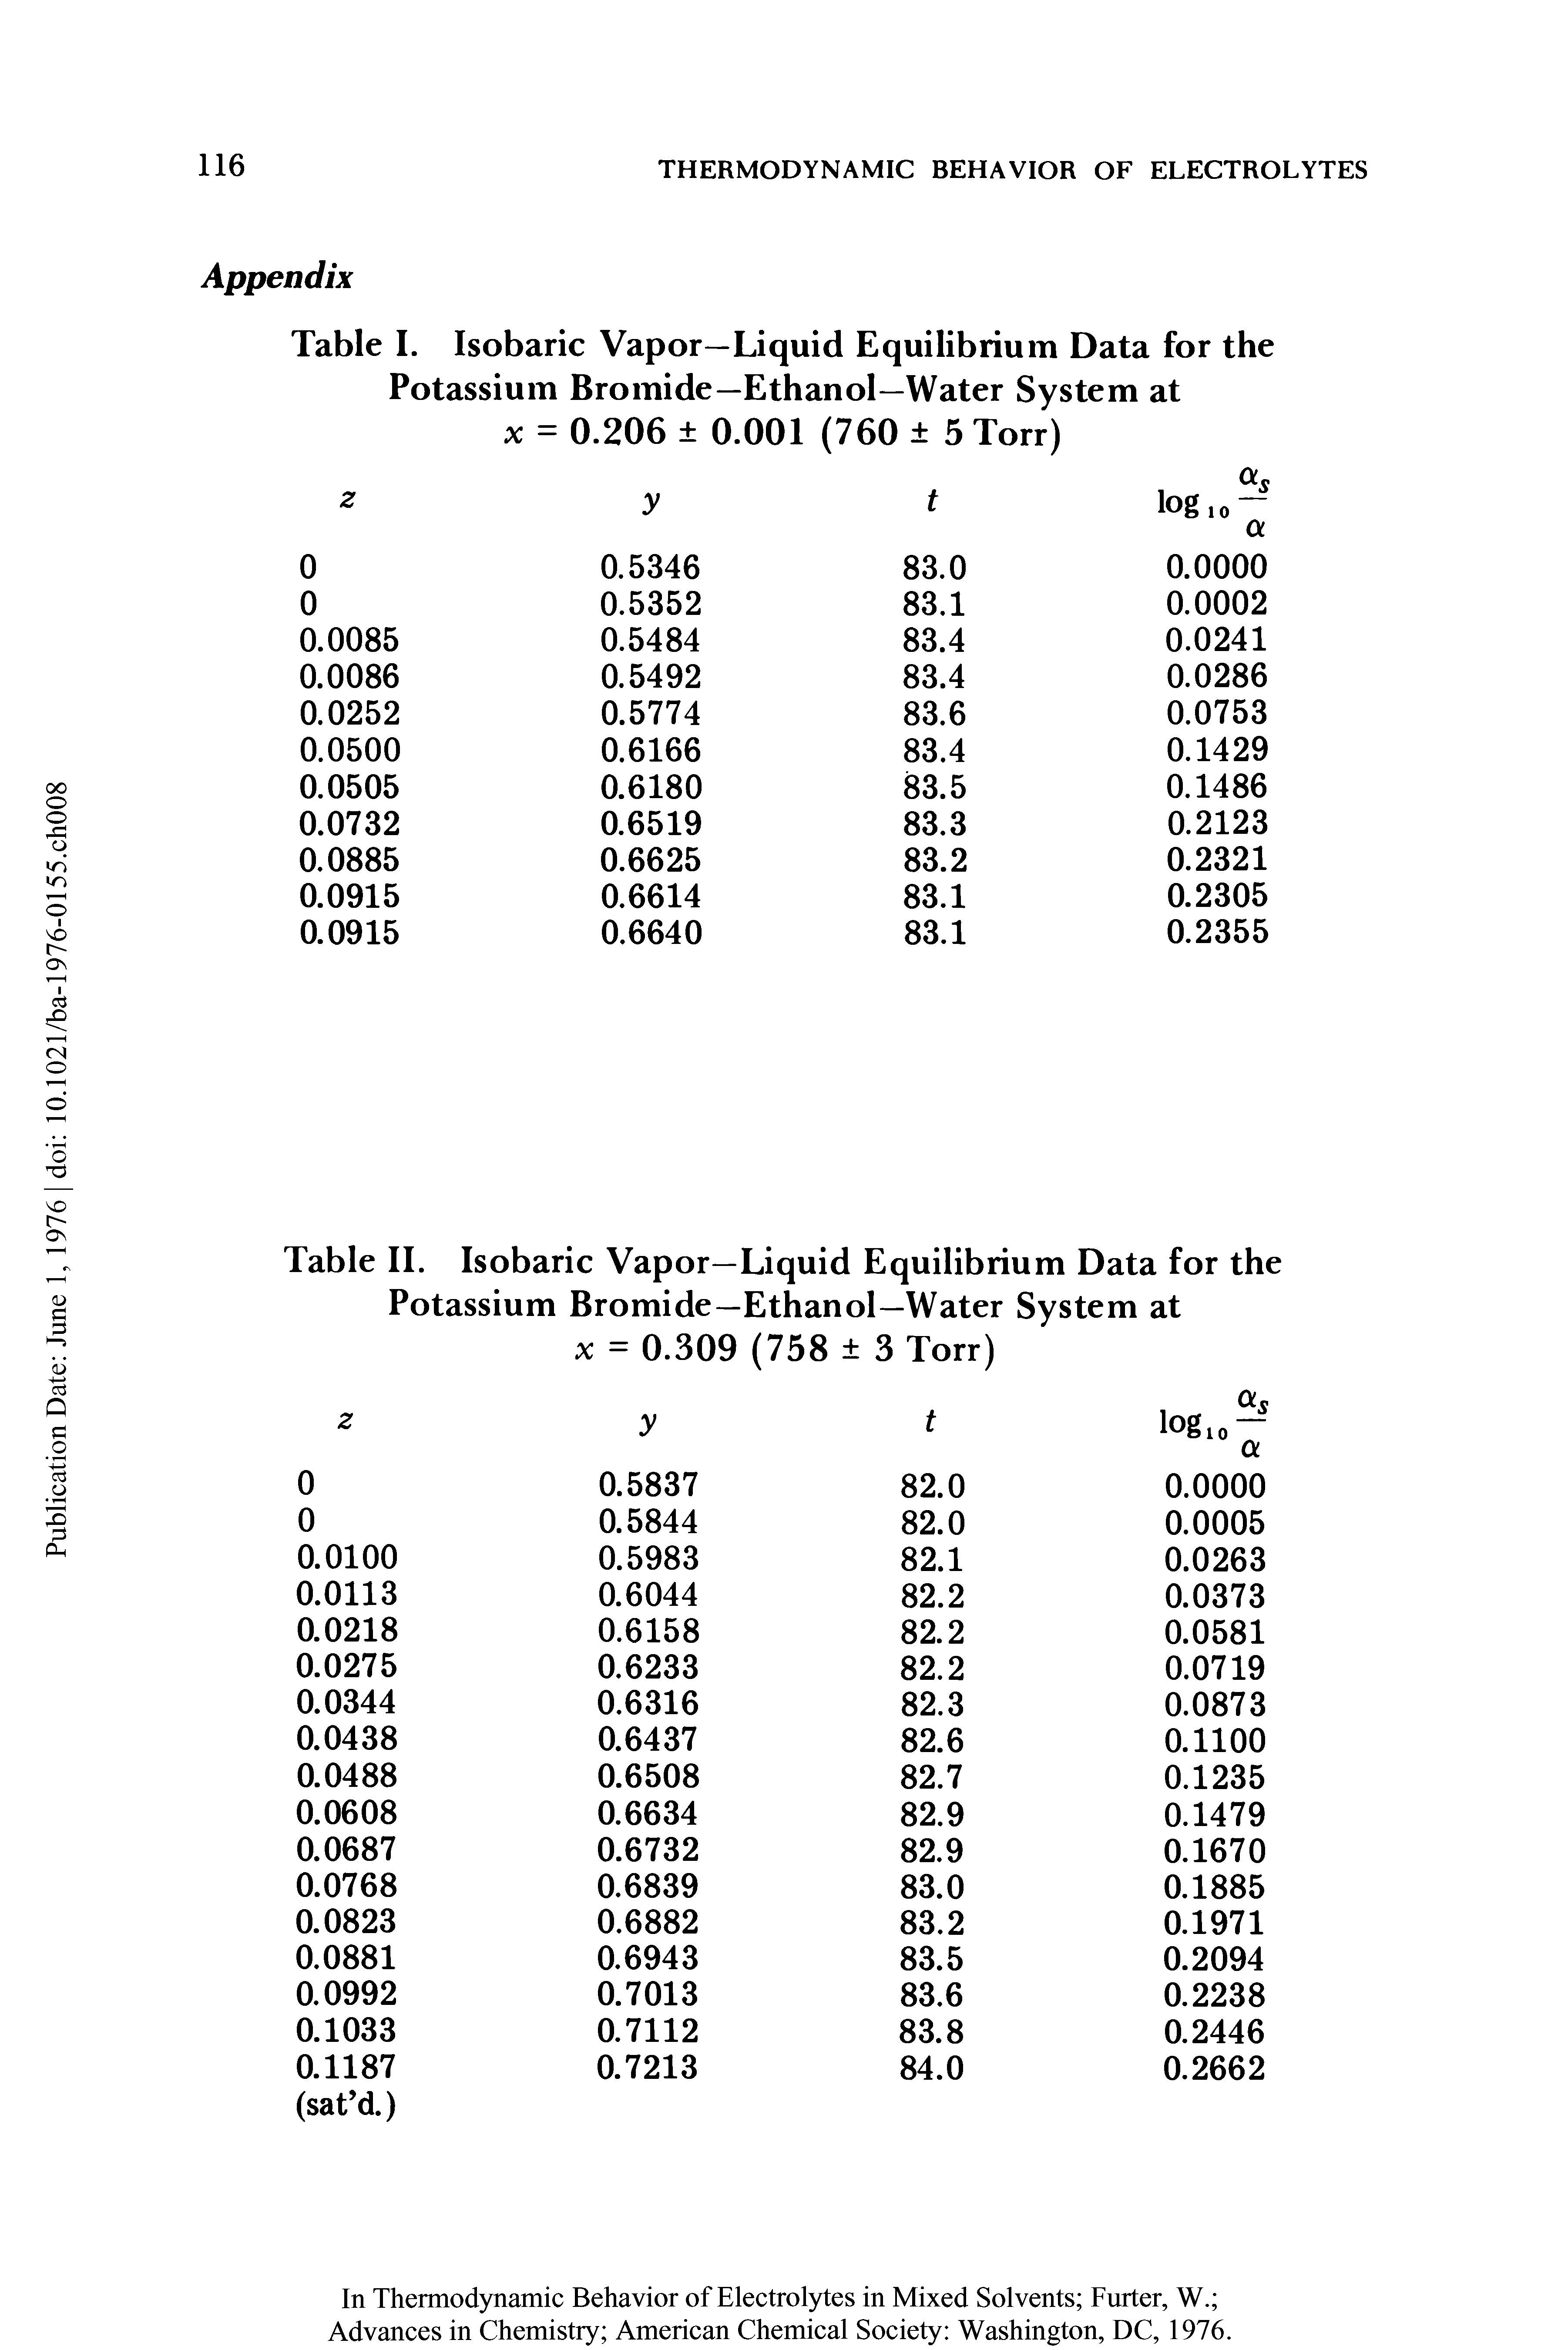 Table I. Isobaric Vapor—Liquid Equilibrium Data for the Potassium Bromide—Ethanol—Water System at x = 0.206 0.001 (760 5 Torr)...